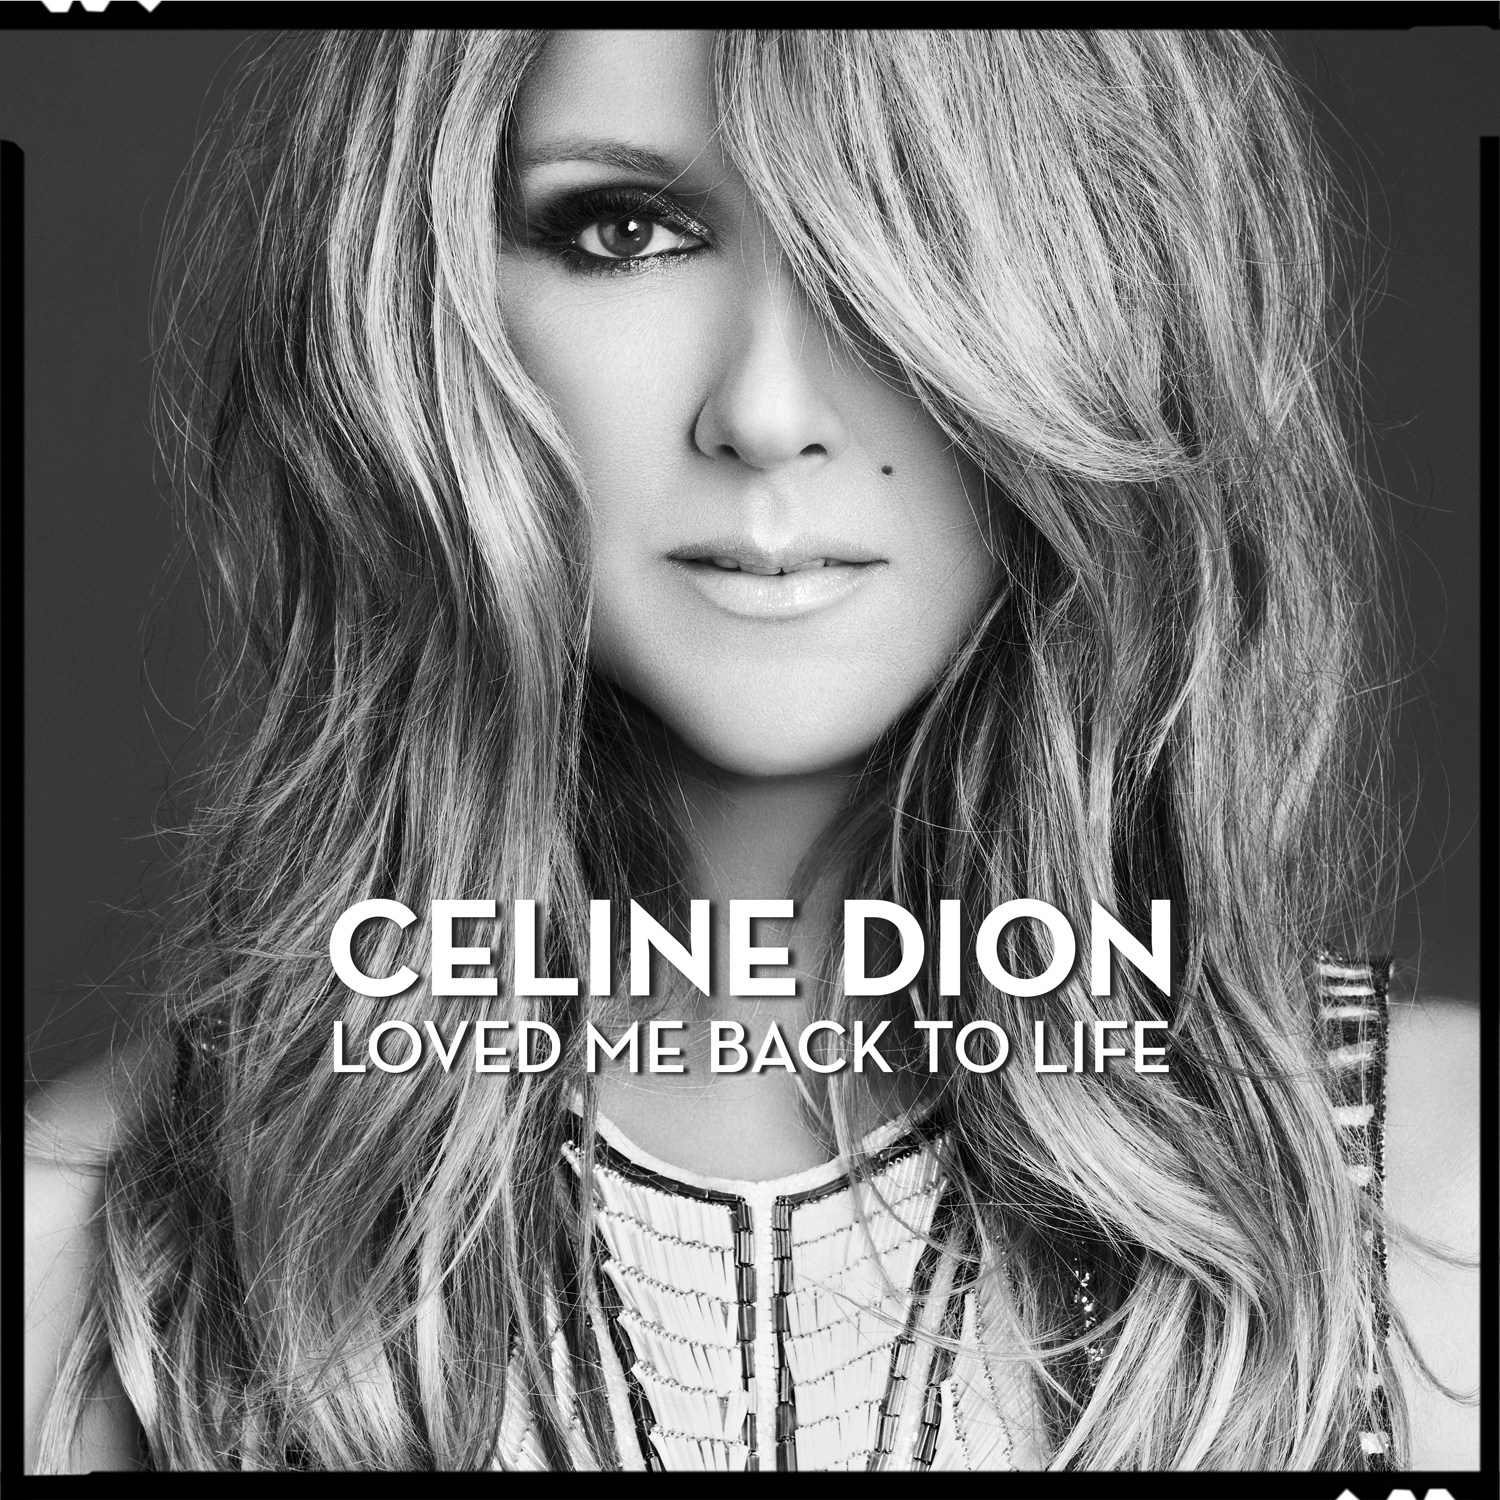 Céline Dion - (CD) - Back Loved To Me Life